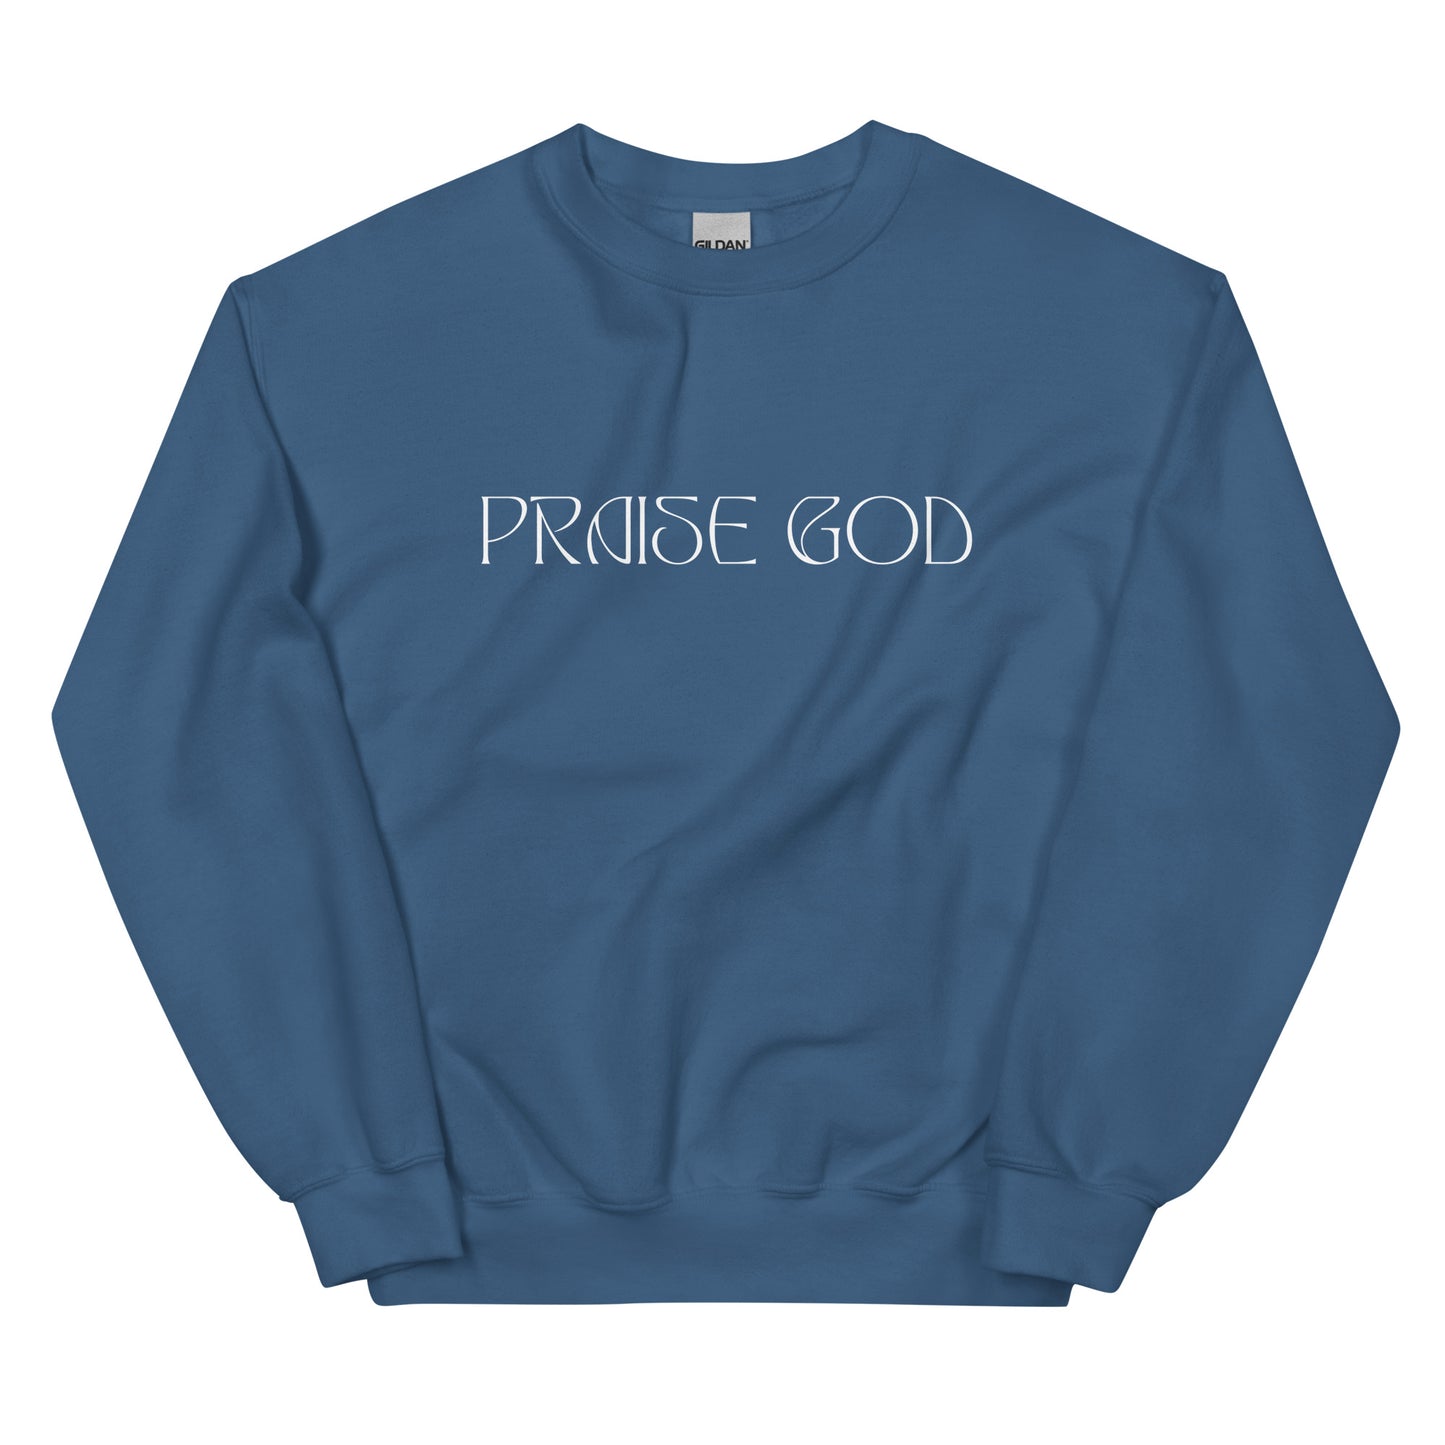 Praise God Crew Sweatshirt